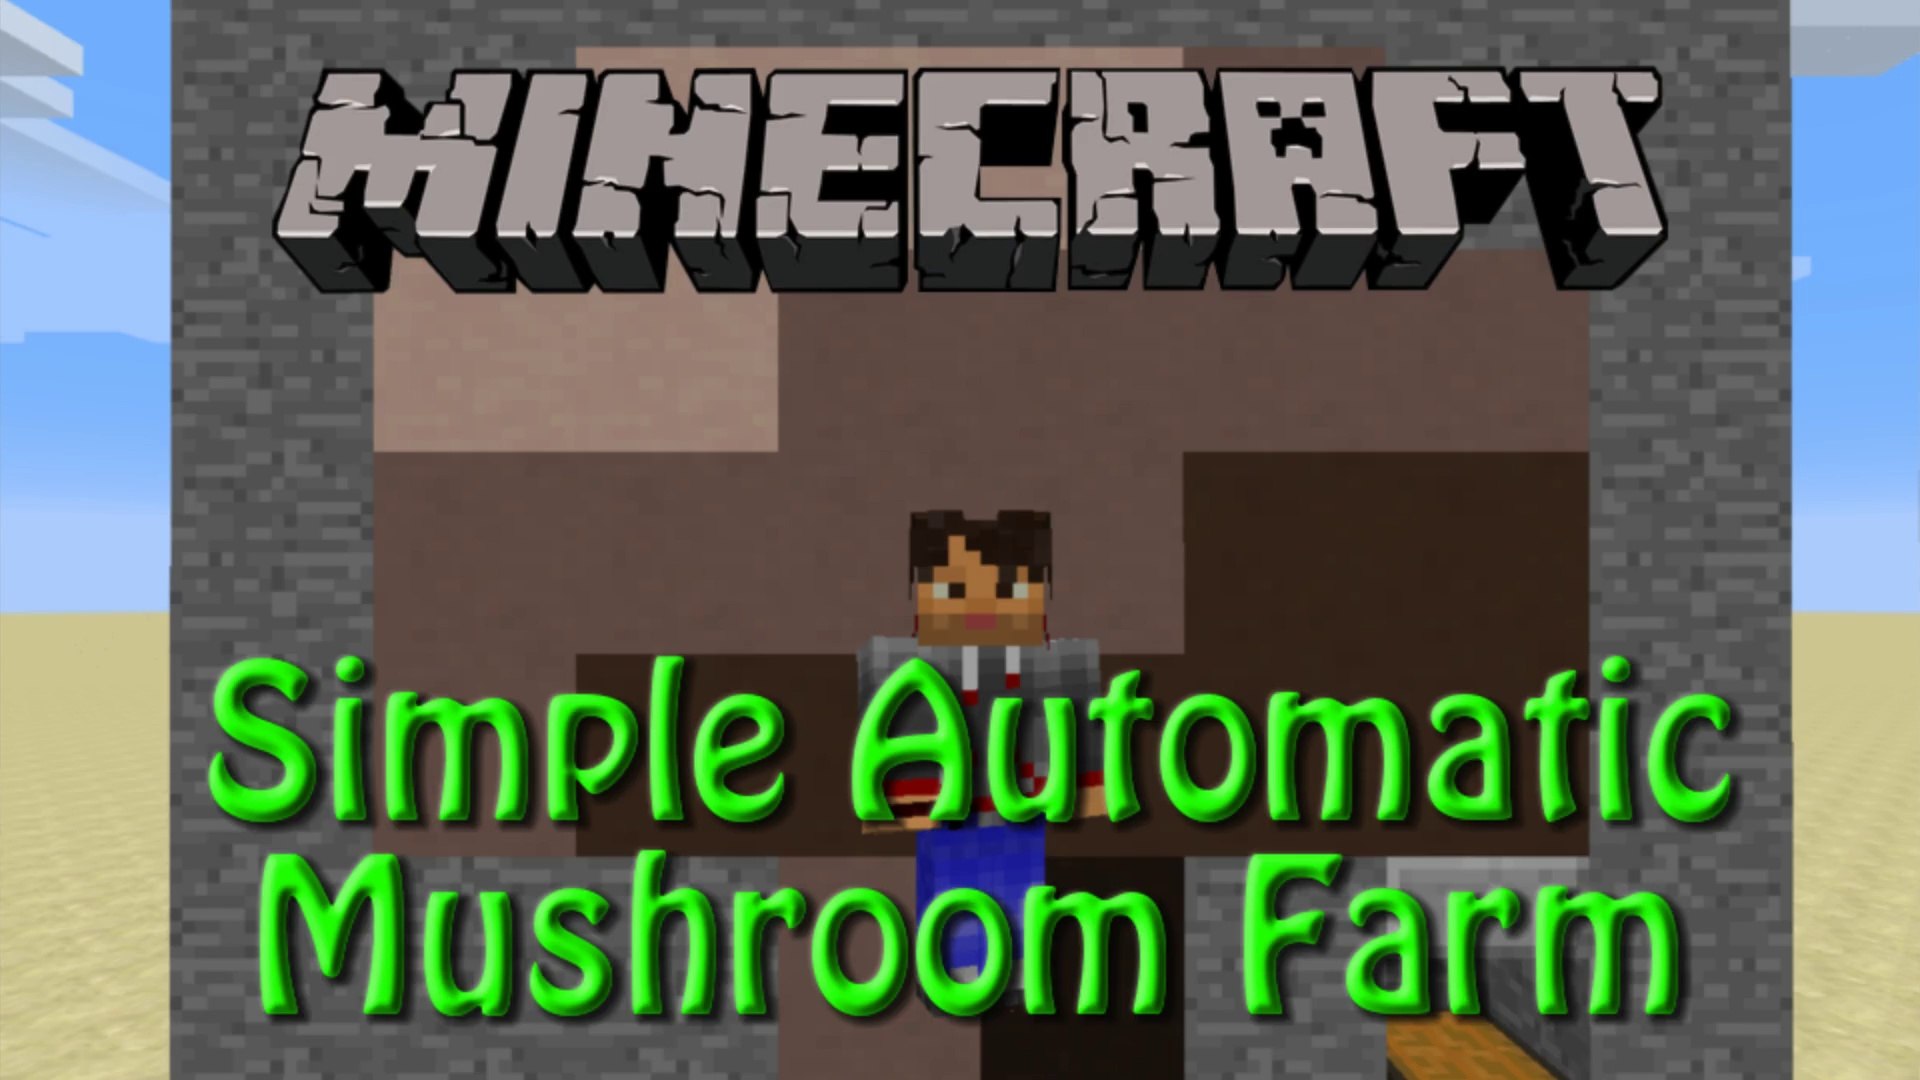 Minecraft: Mushroom Farm Tutorial for 1.8, simple, fully automatic - video  Dailymotion